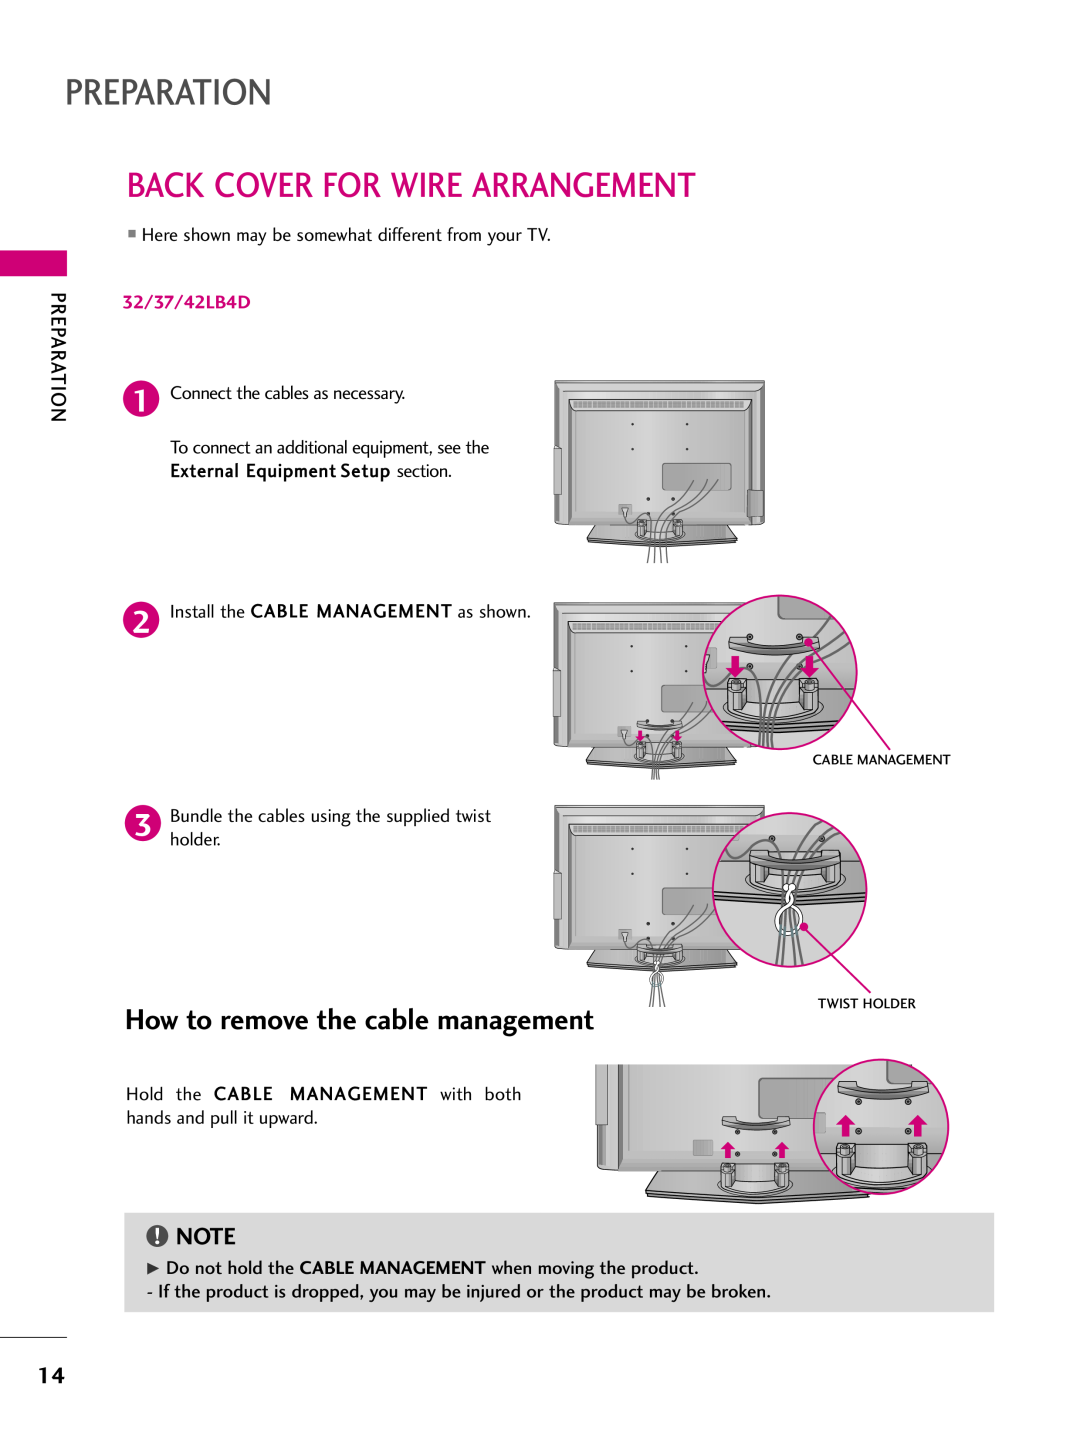 LG Electronics 37LB5D Back Cover For Wire Arrangement, How to remove the cable management, Preparation, 32/37/42LB4D 